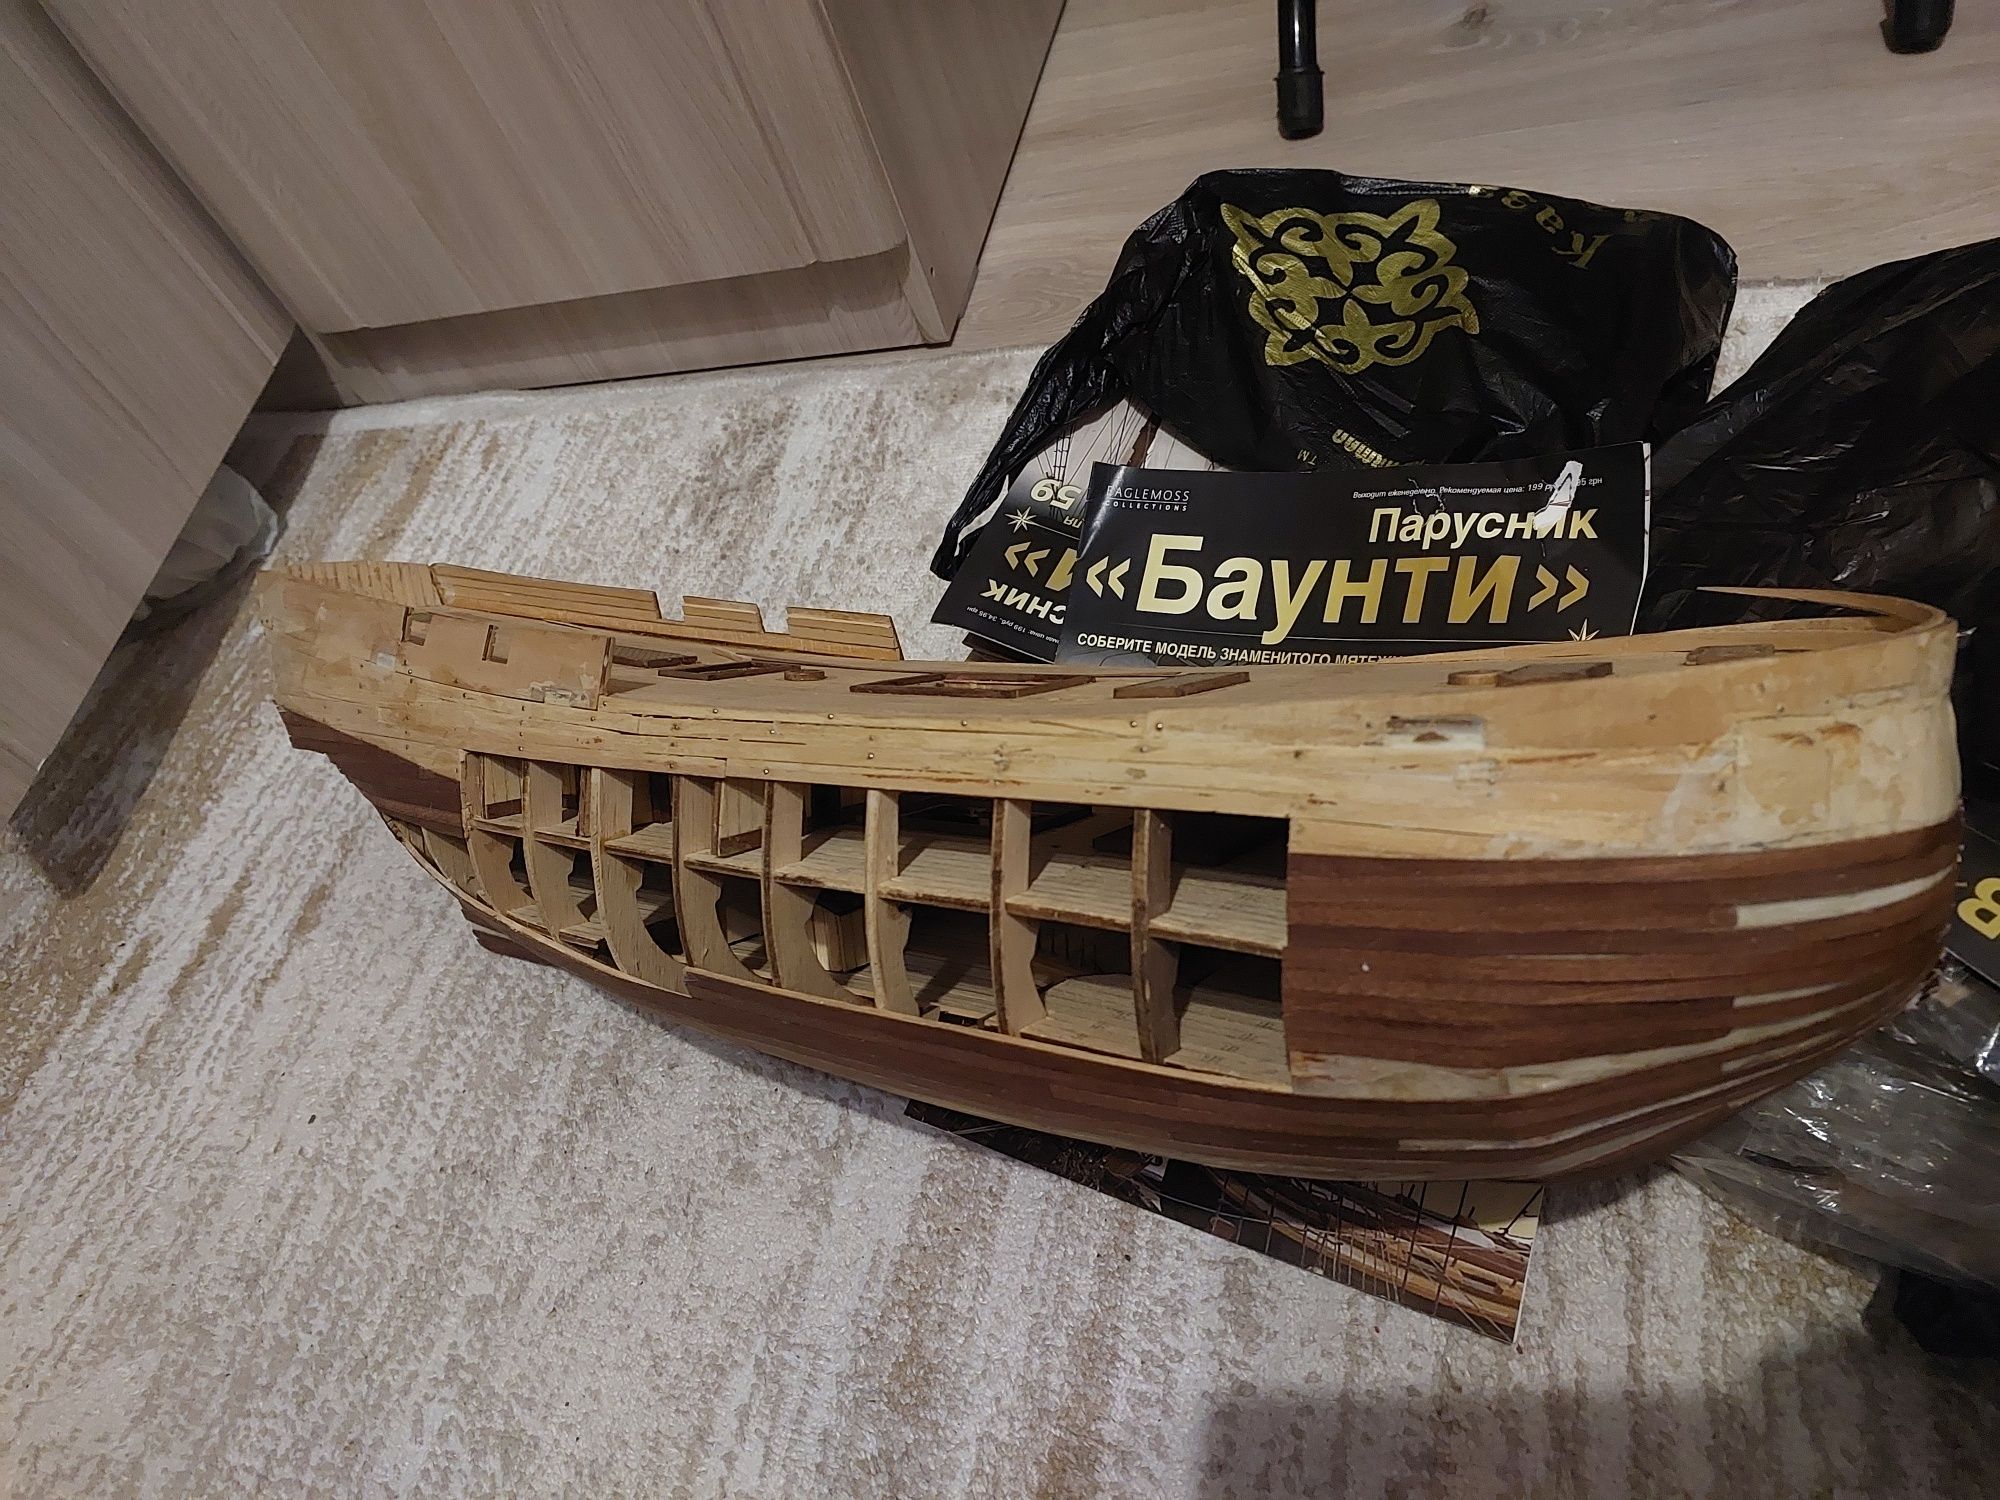 Продам модель корабля Баунти